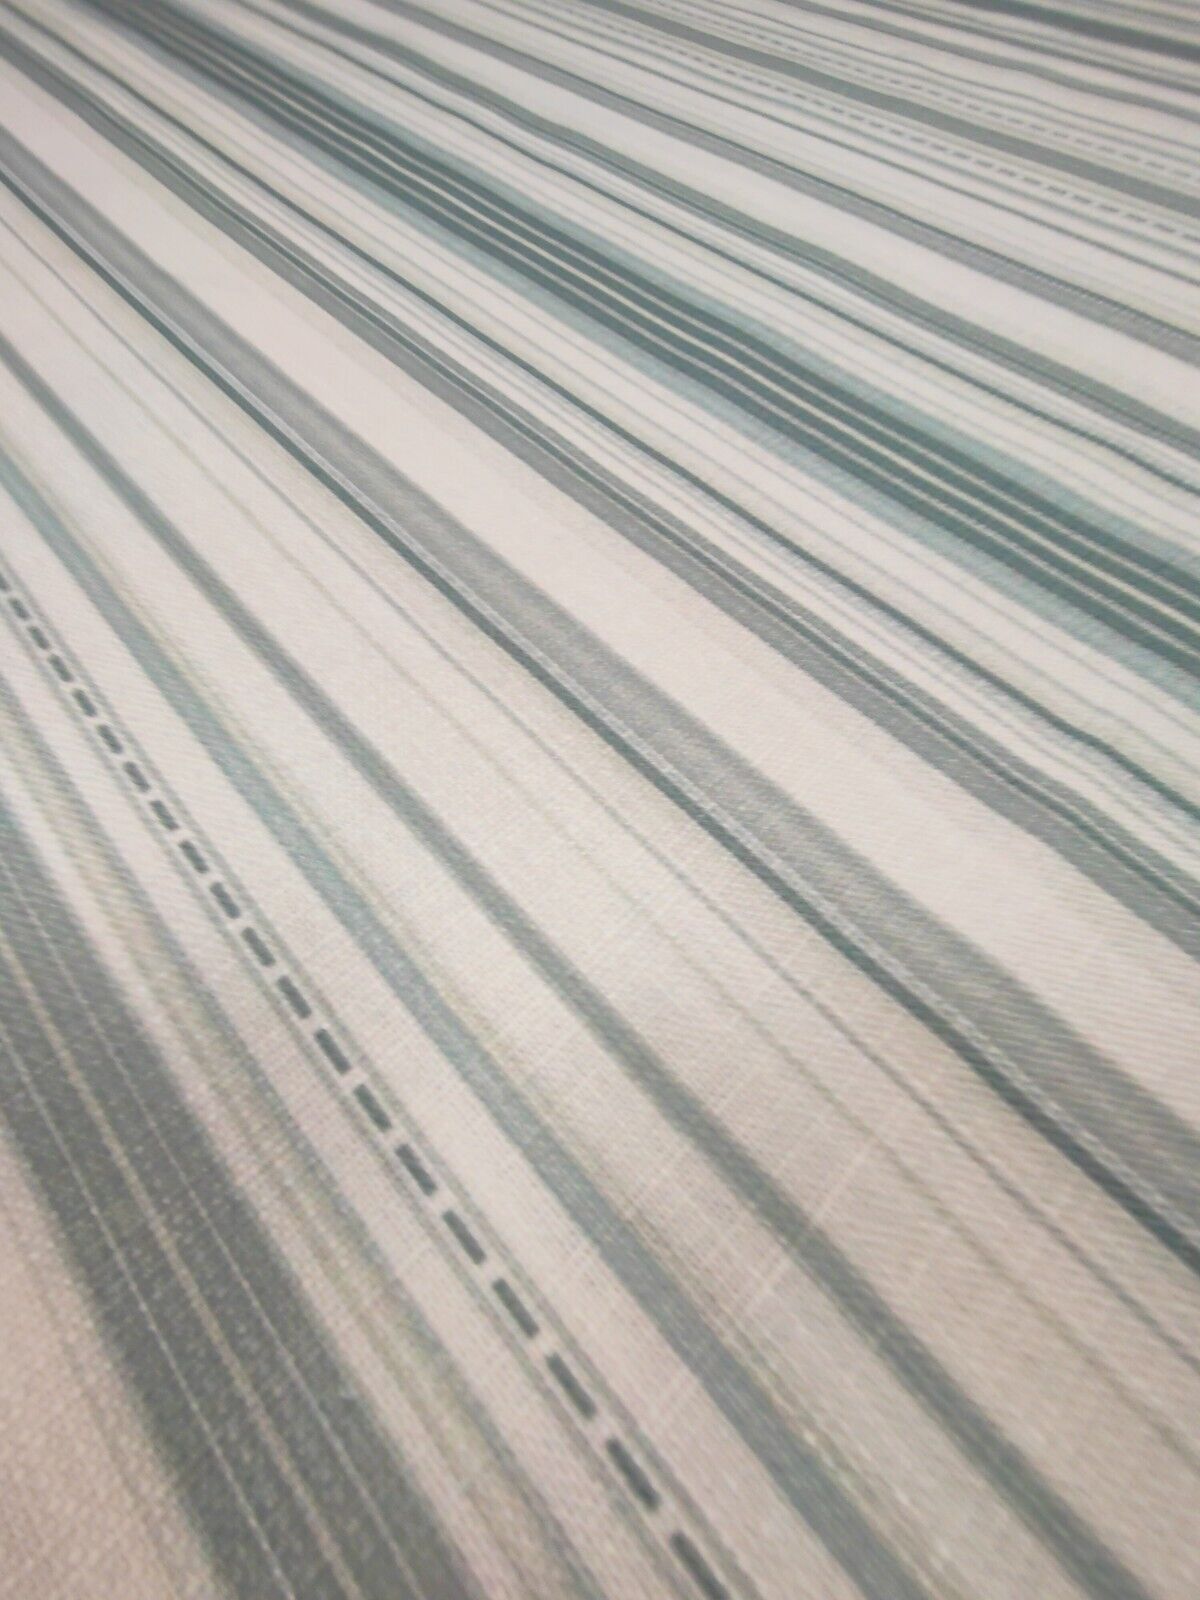 Art Of The Loom Gisburn Stripe 1 Curtain Upholstery Fabric 1.2 Metres